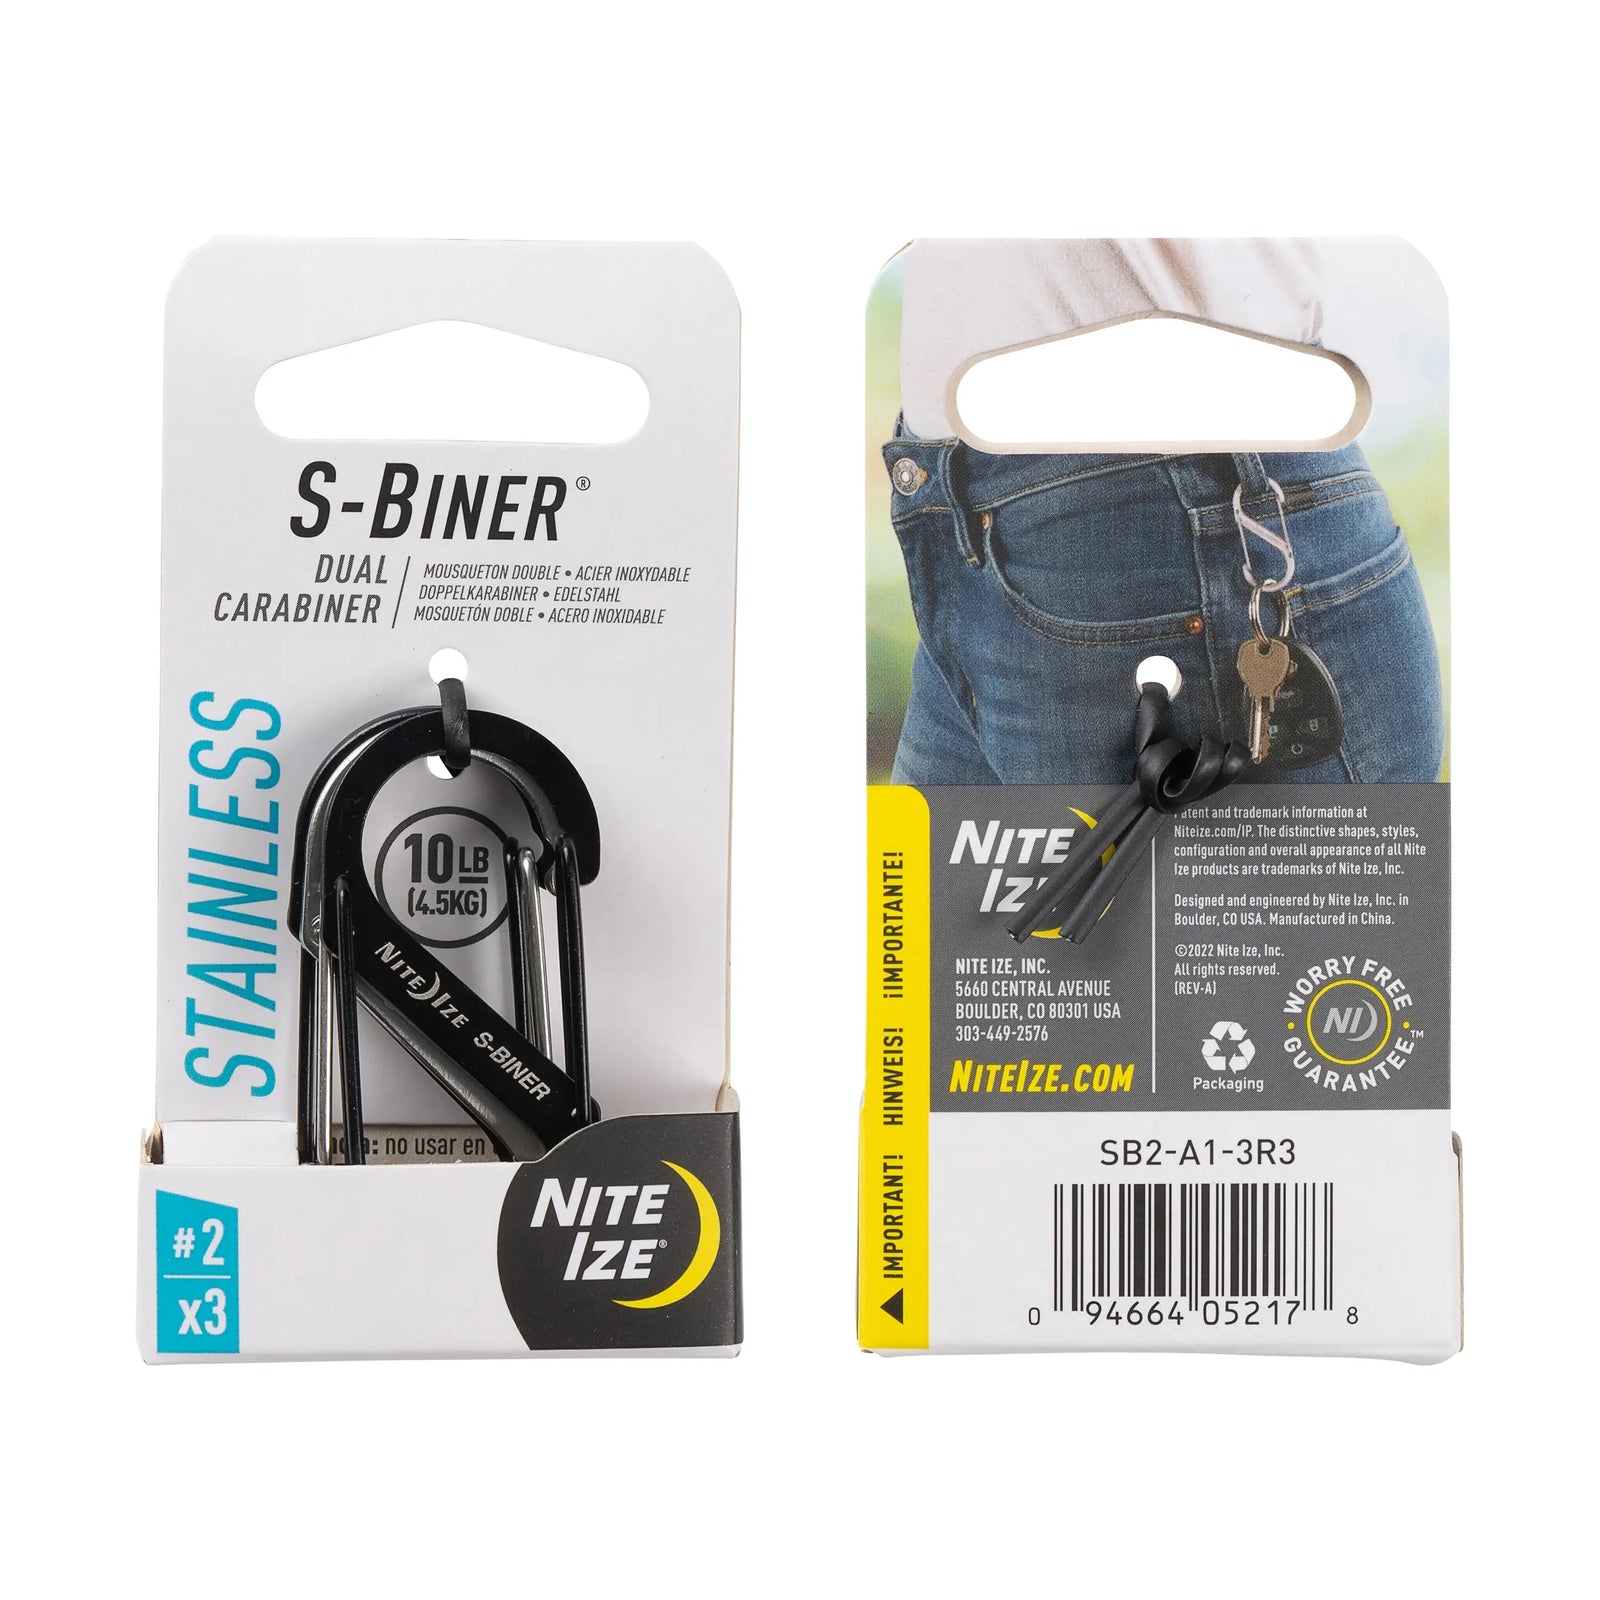 Nite Ize S-Biner Stainless Steel #2 3-Pack